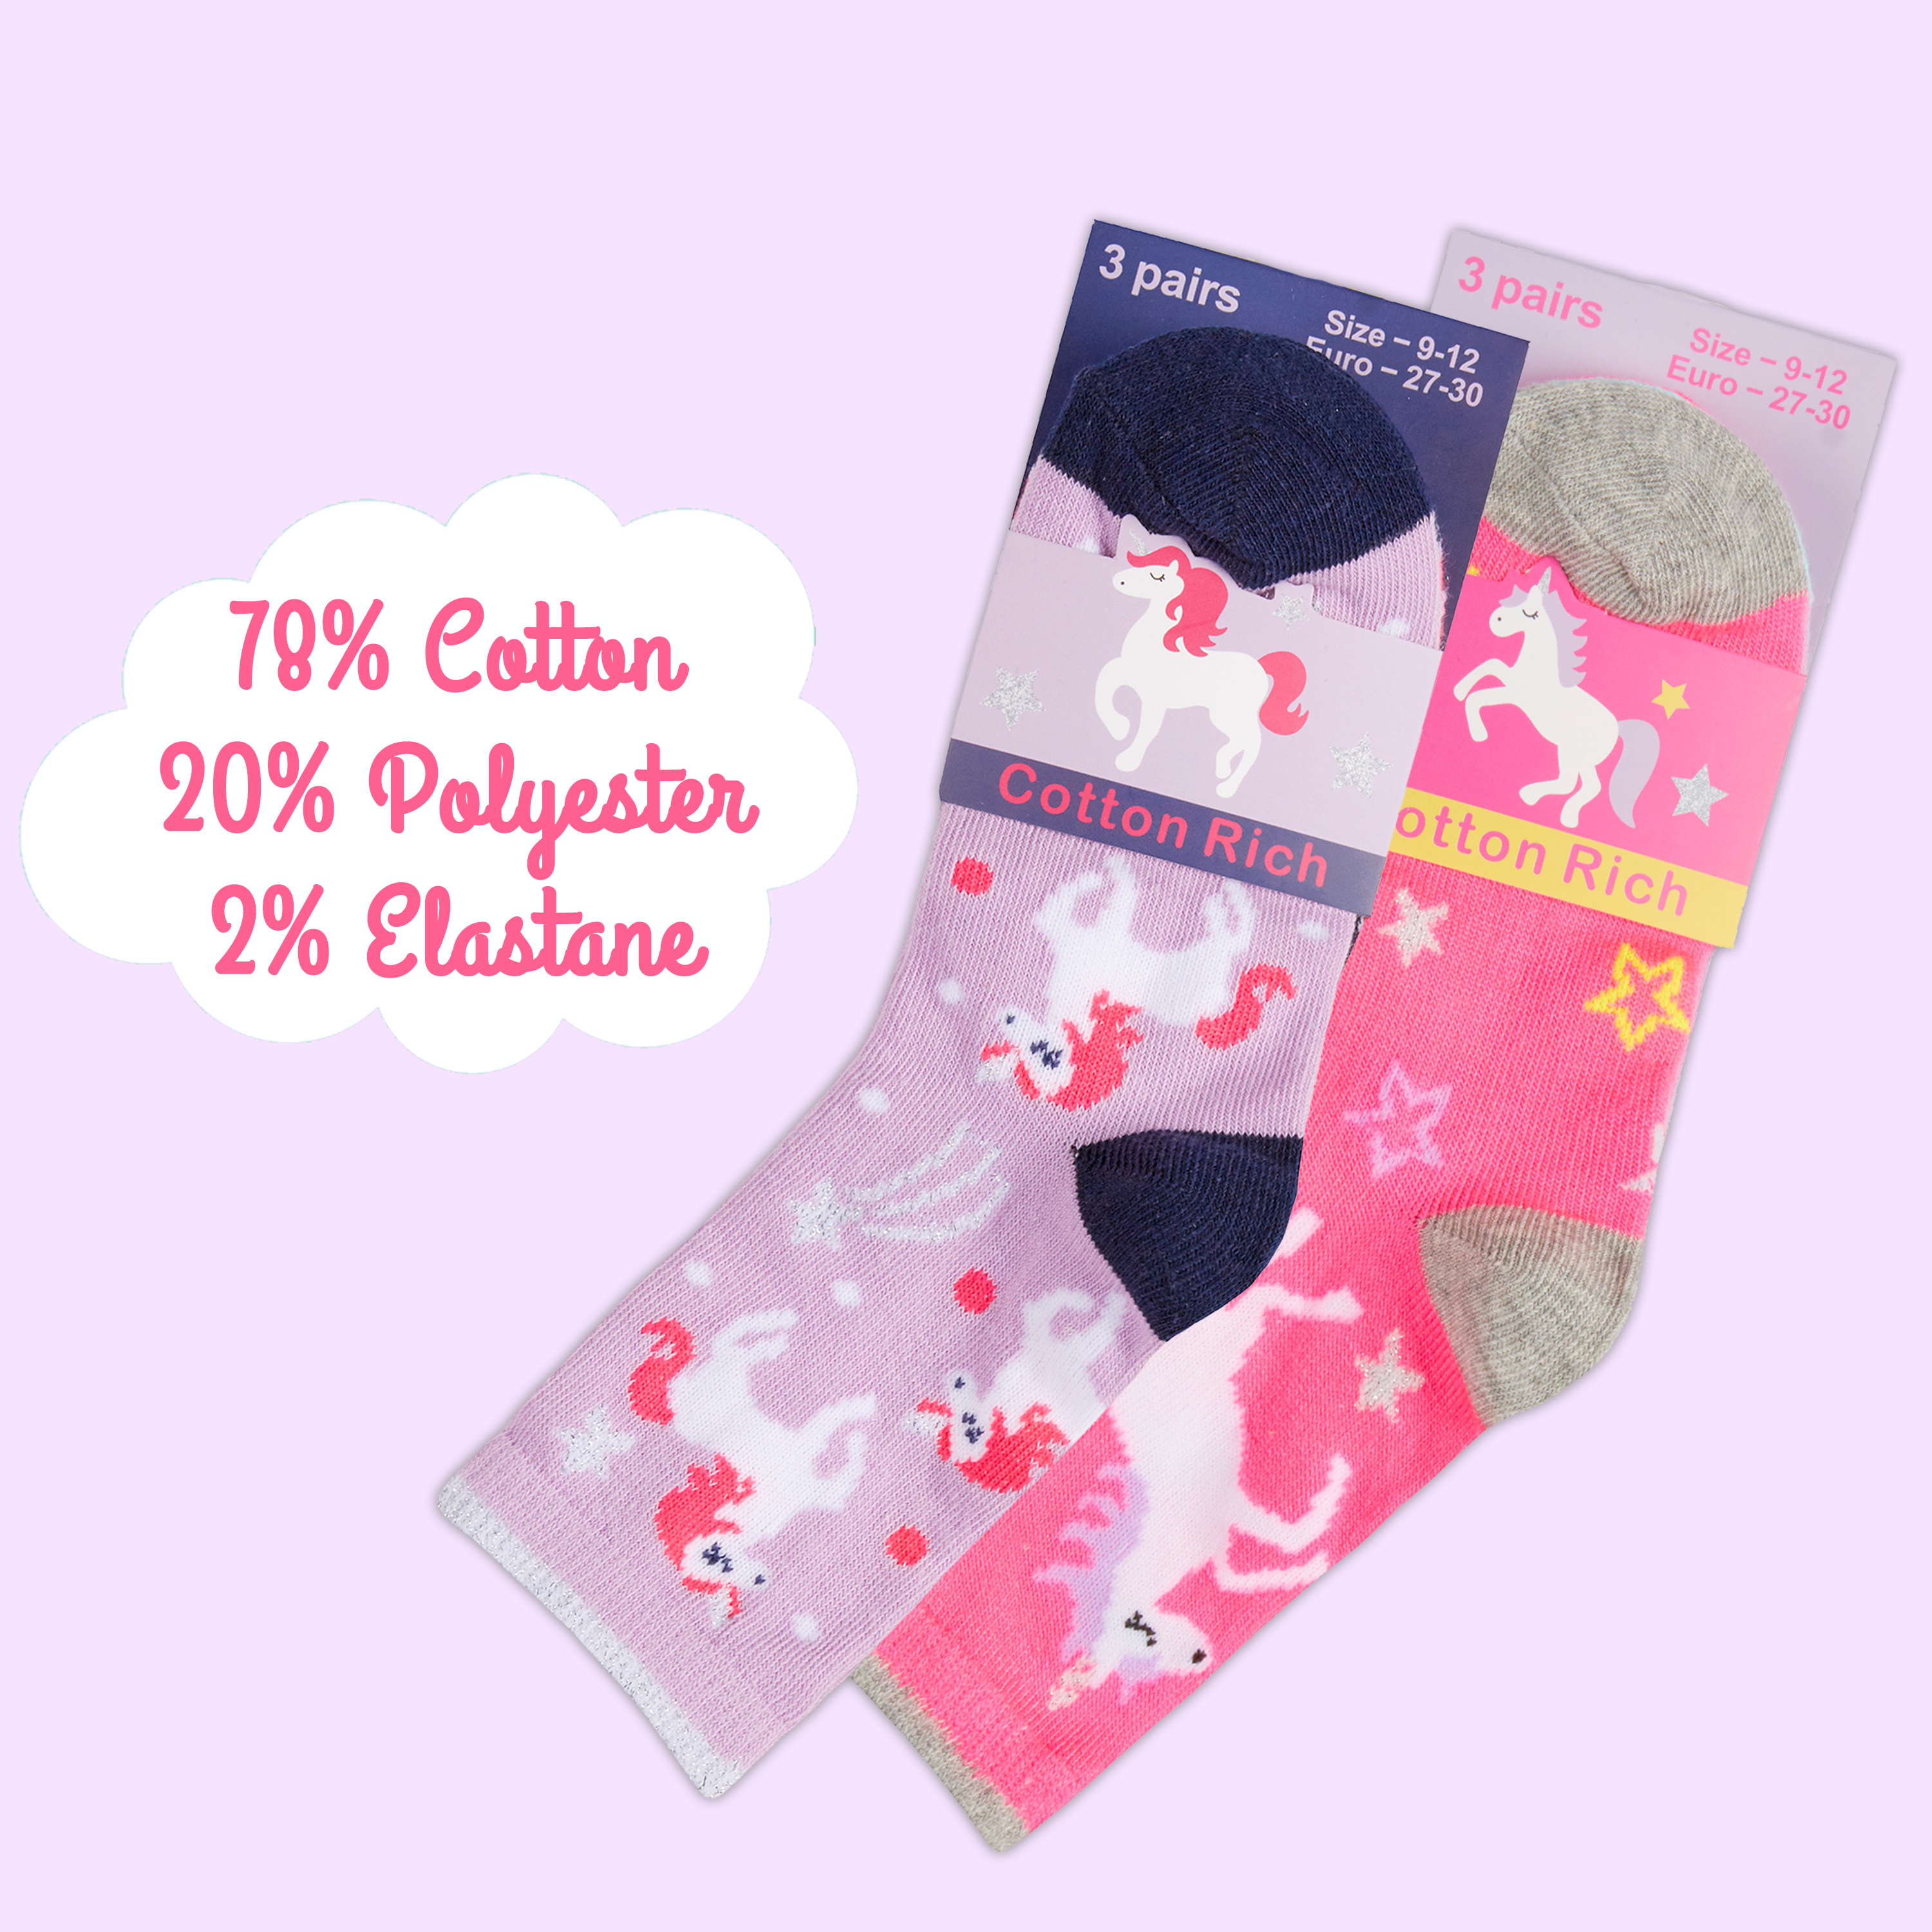 Girls Unicorn Socks Cotton Rich Cartoon Novelty Design Socks Multicolour 3 Pairs 